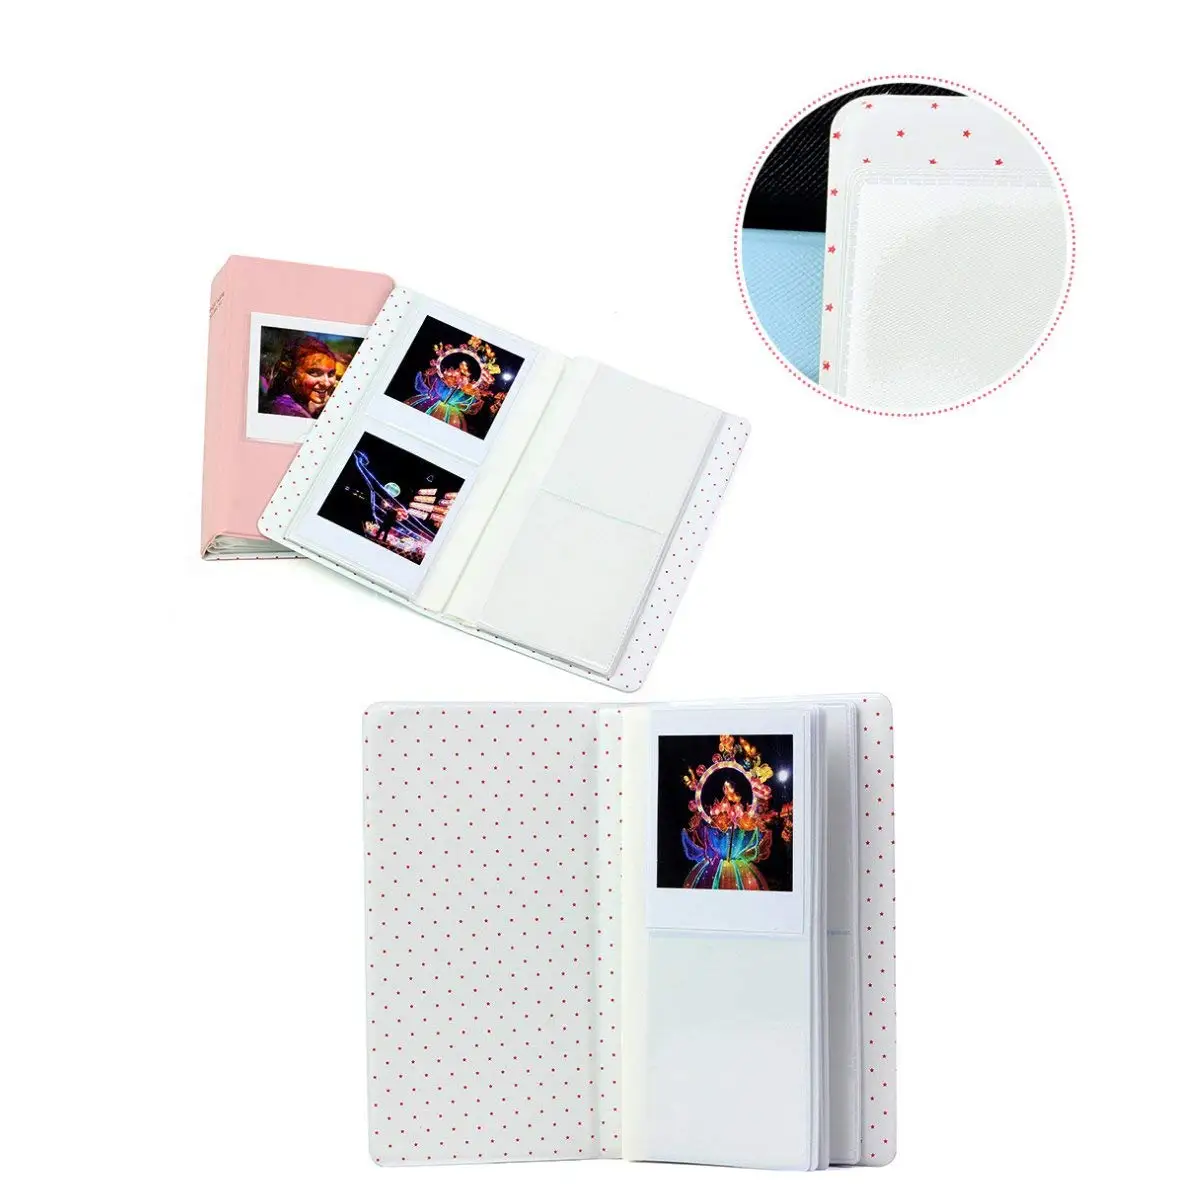 64 Pockets Fuji Fujifilm Instax SQ20 Square Films Photo Album SQ 20 10 6 1  Instant Camera SP 3 Printer Photo Paper Book Album|Film Camera| - AliExpress